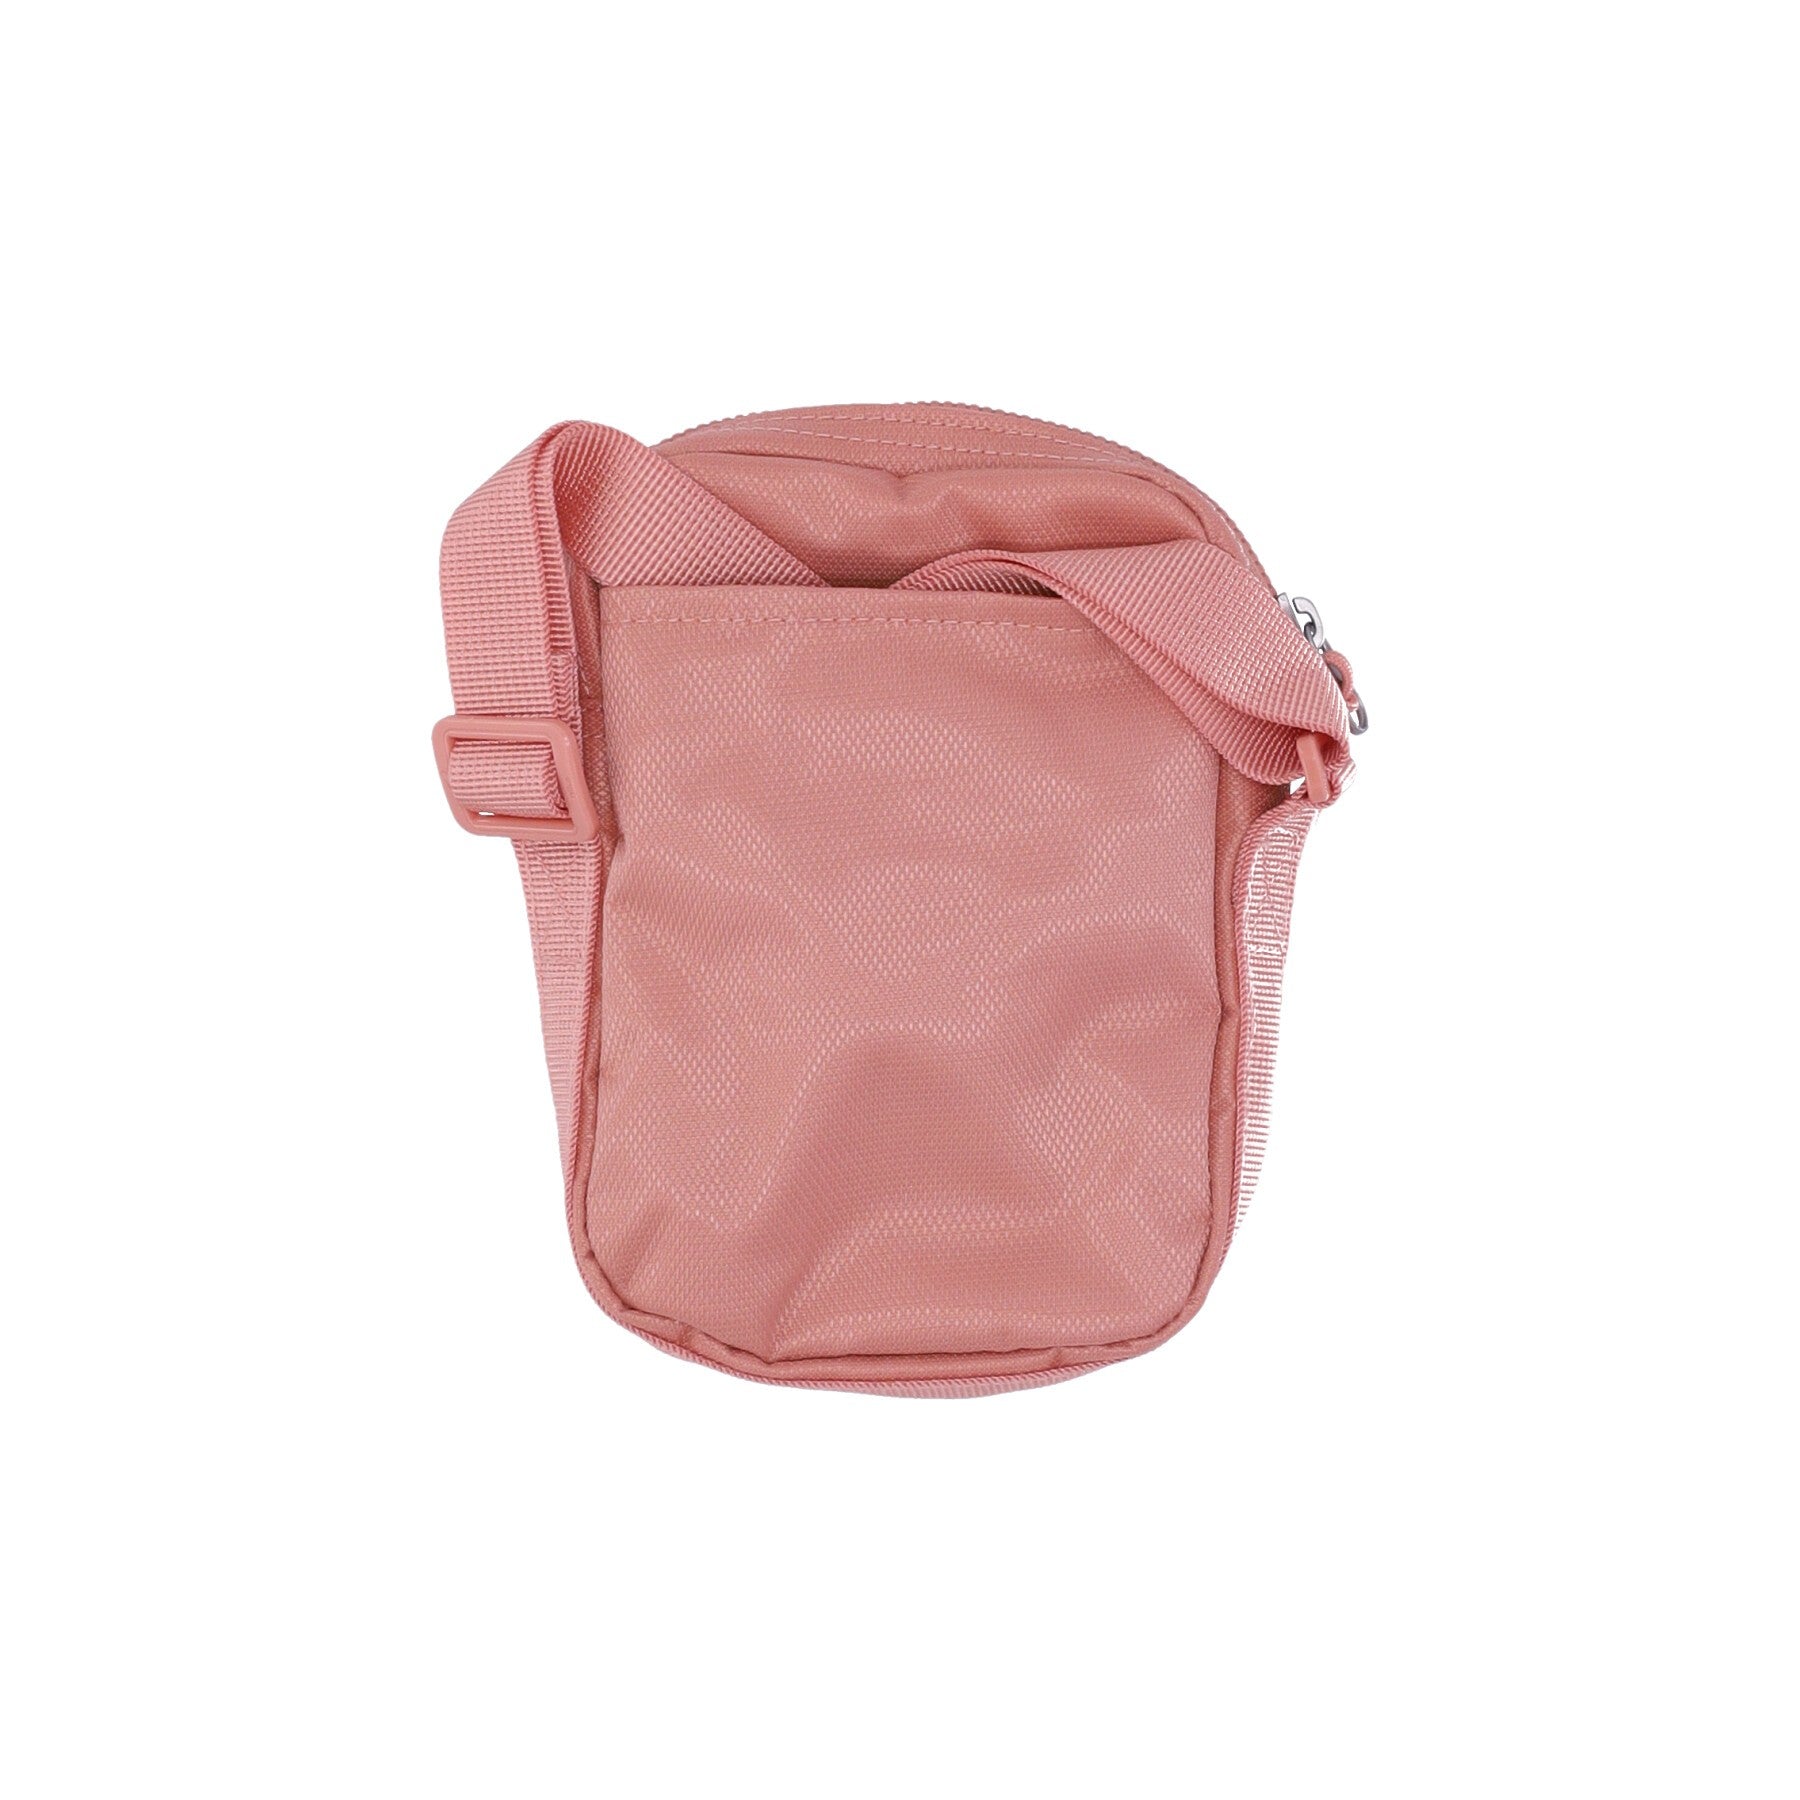 Heritage Smit Men's Bag Pink Glaze/pink Glaze/white